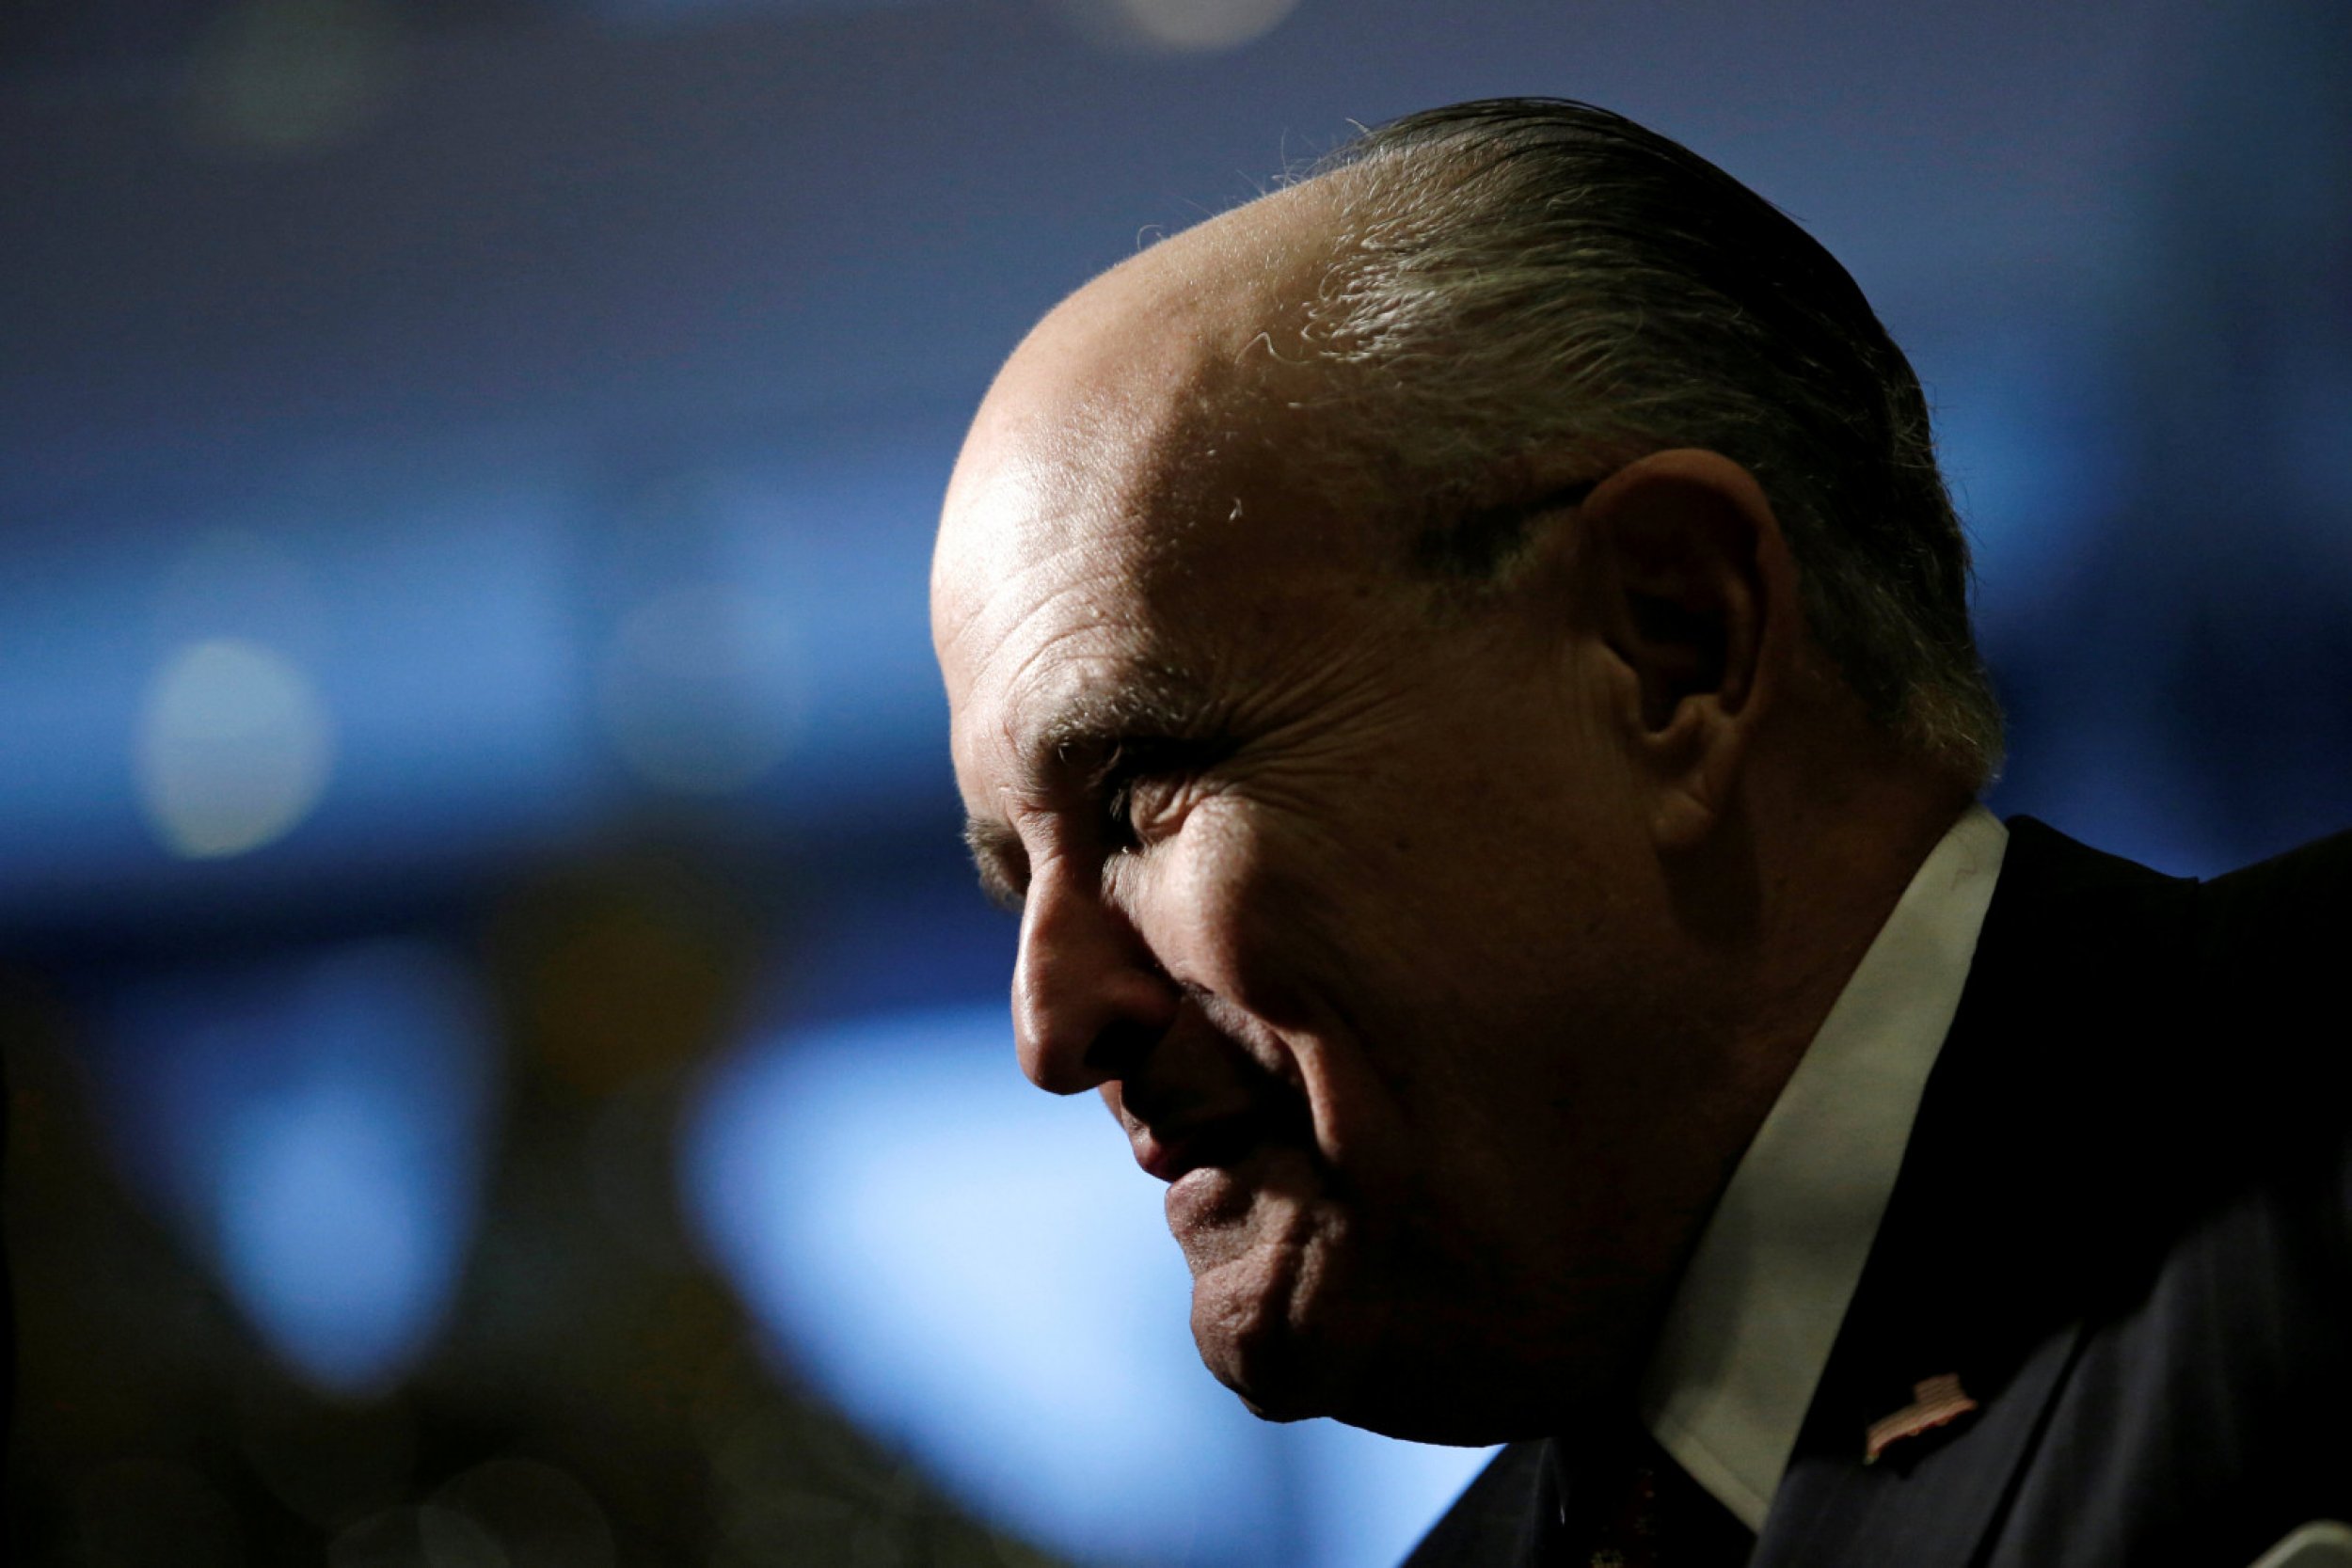 Rudy Giuliani To Lead Cyber Security Meetings